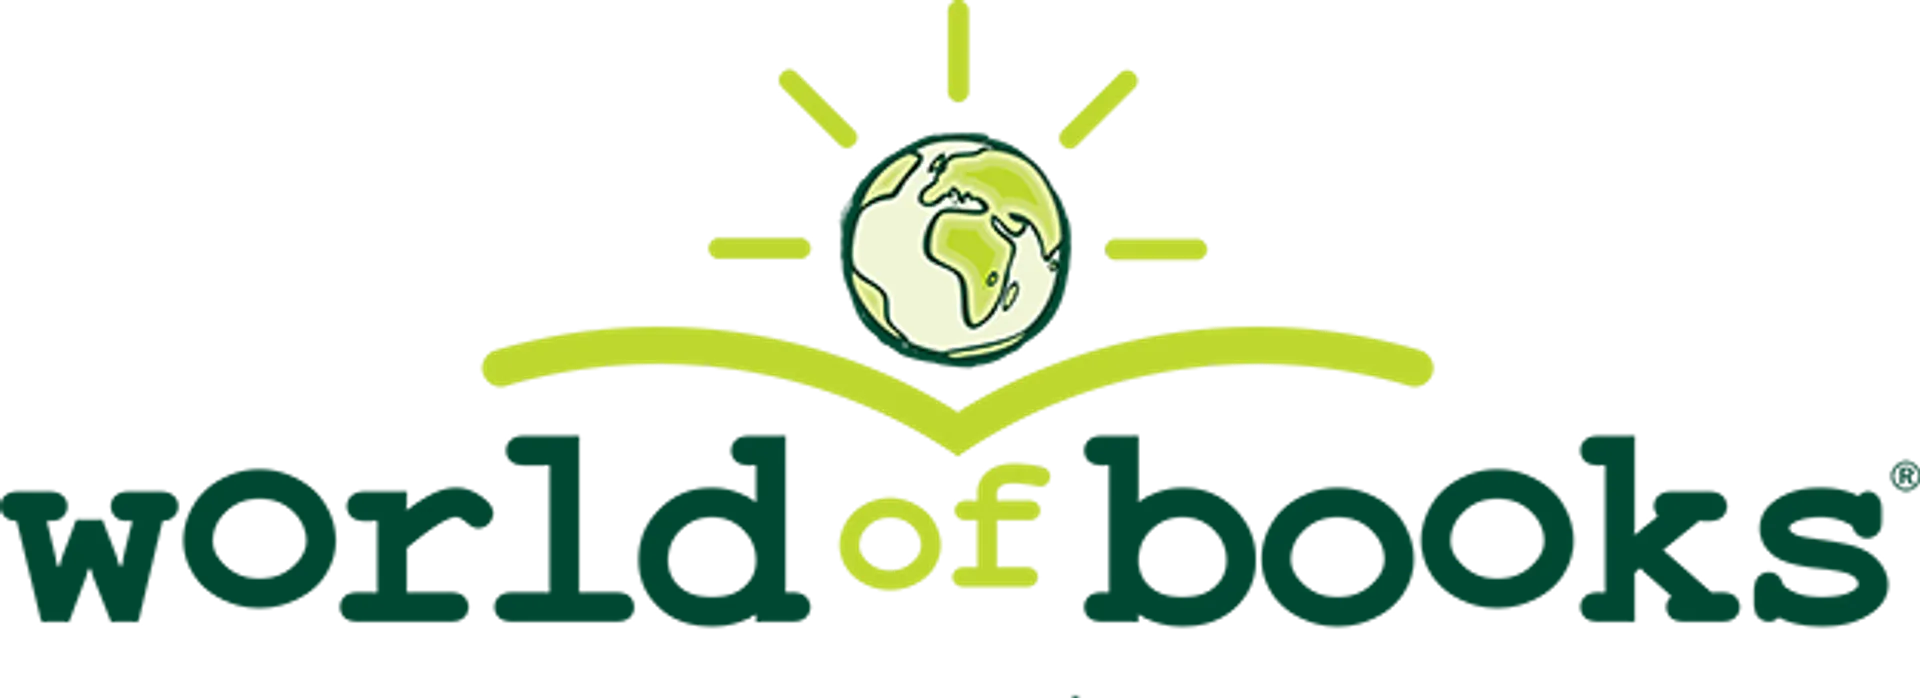 WORLD OF BOOKS logo